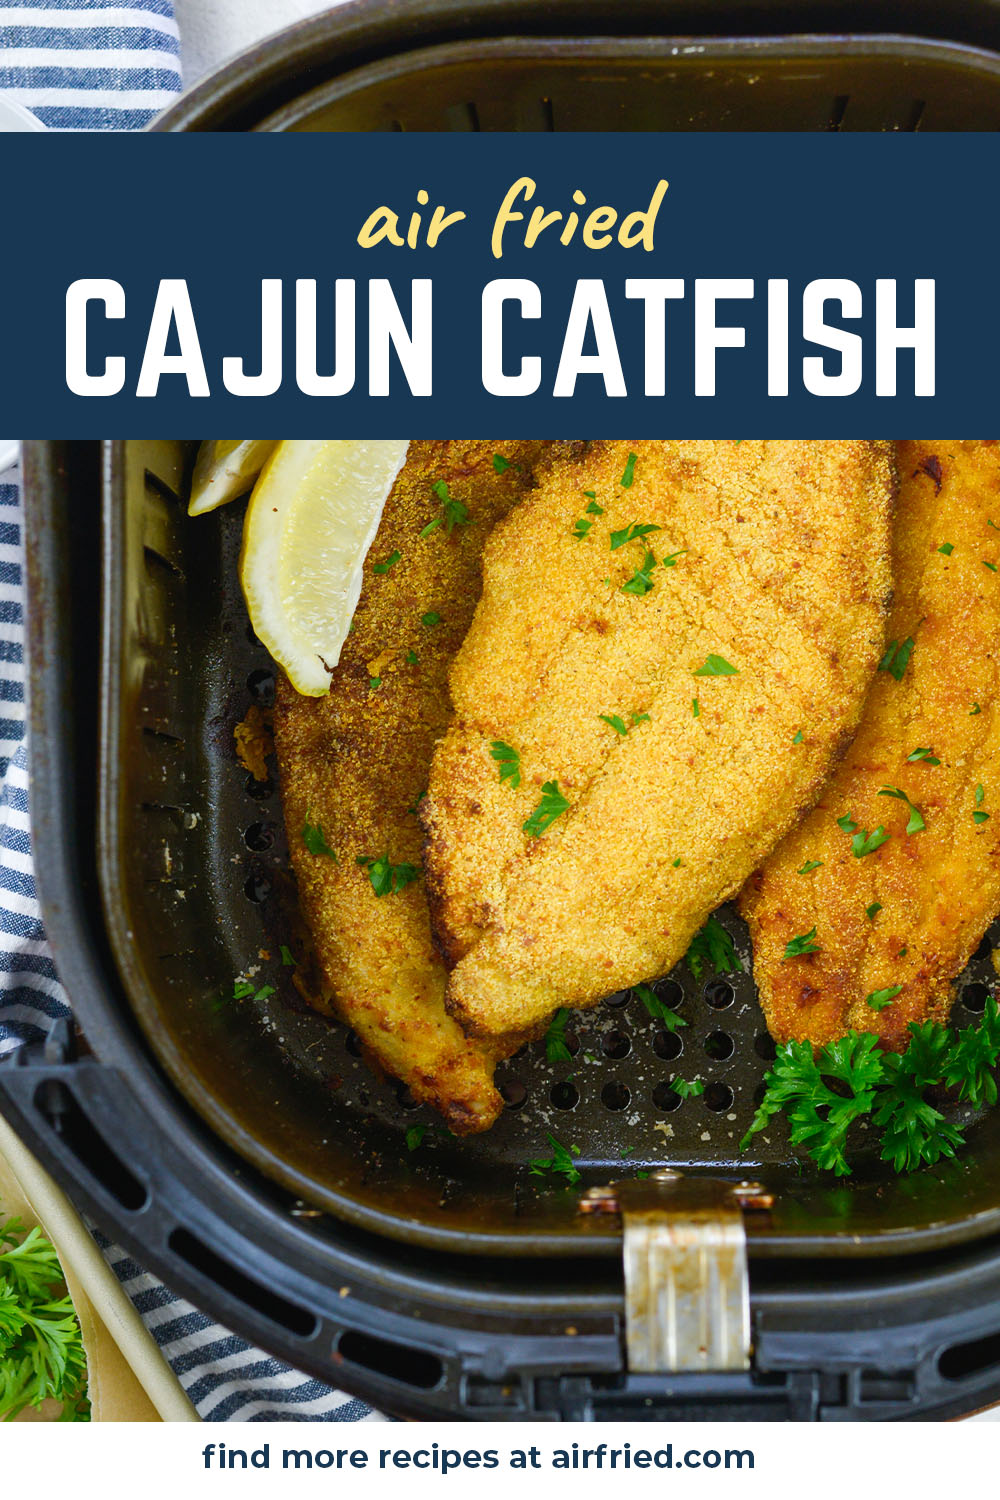 We breaded these air fryer catfish in a mild cajun seasoning!  So esay, so yummy!